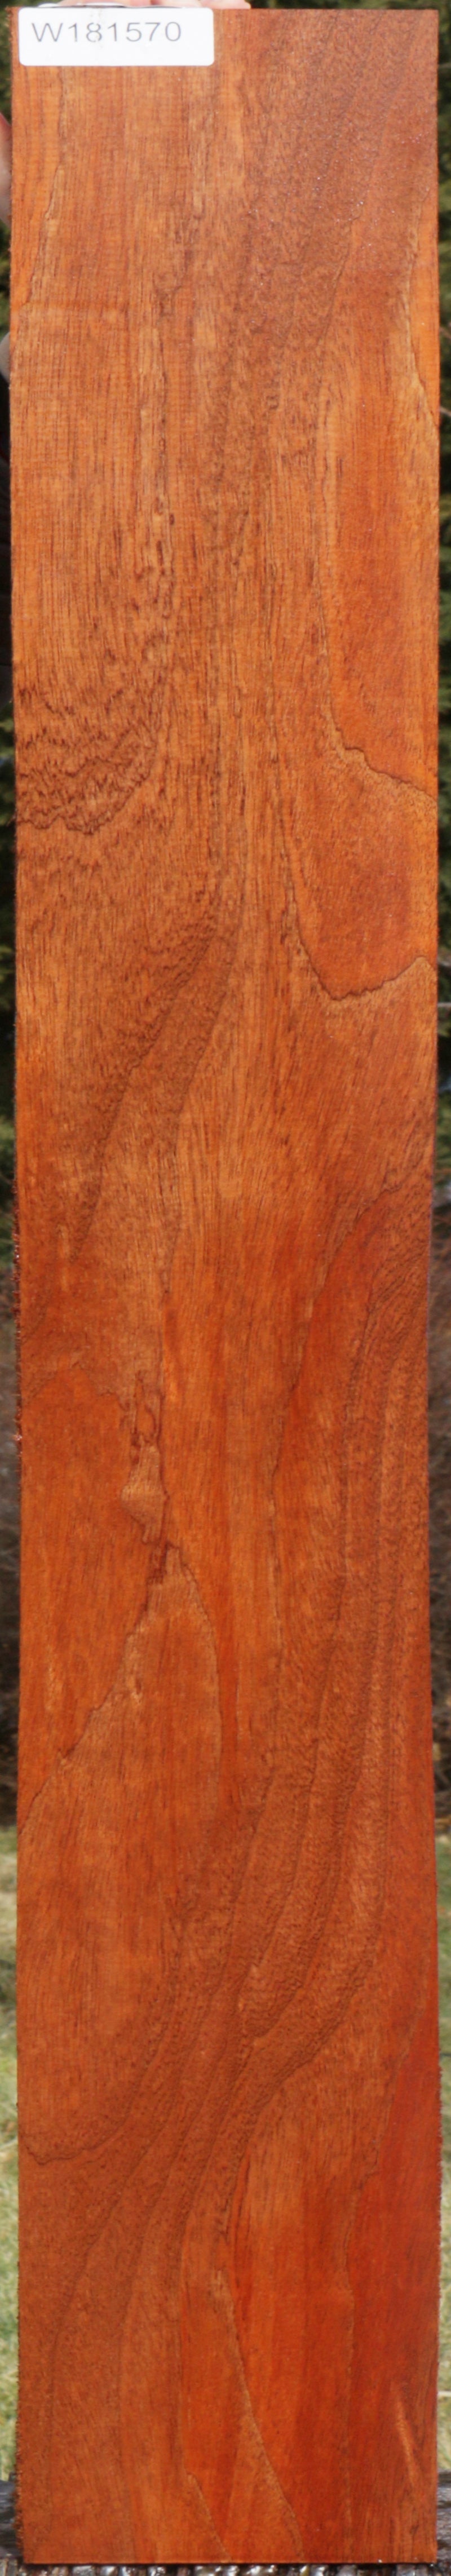 Sipo Lumber